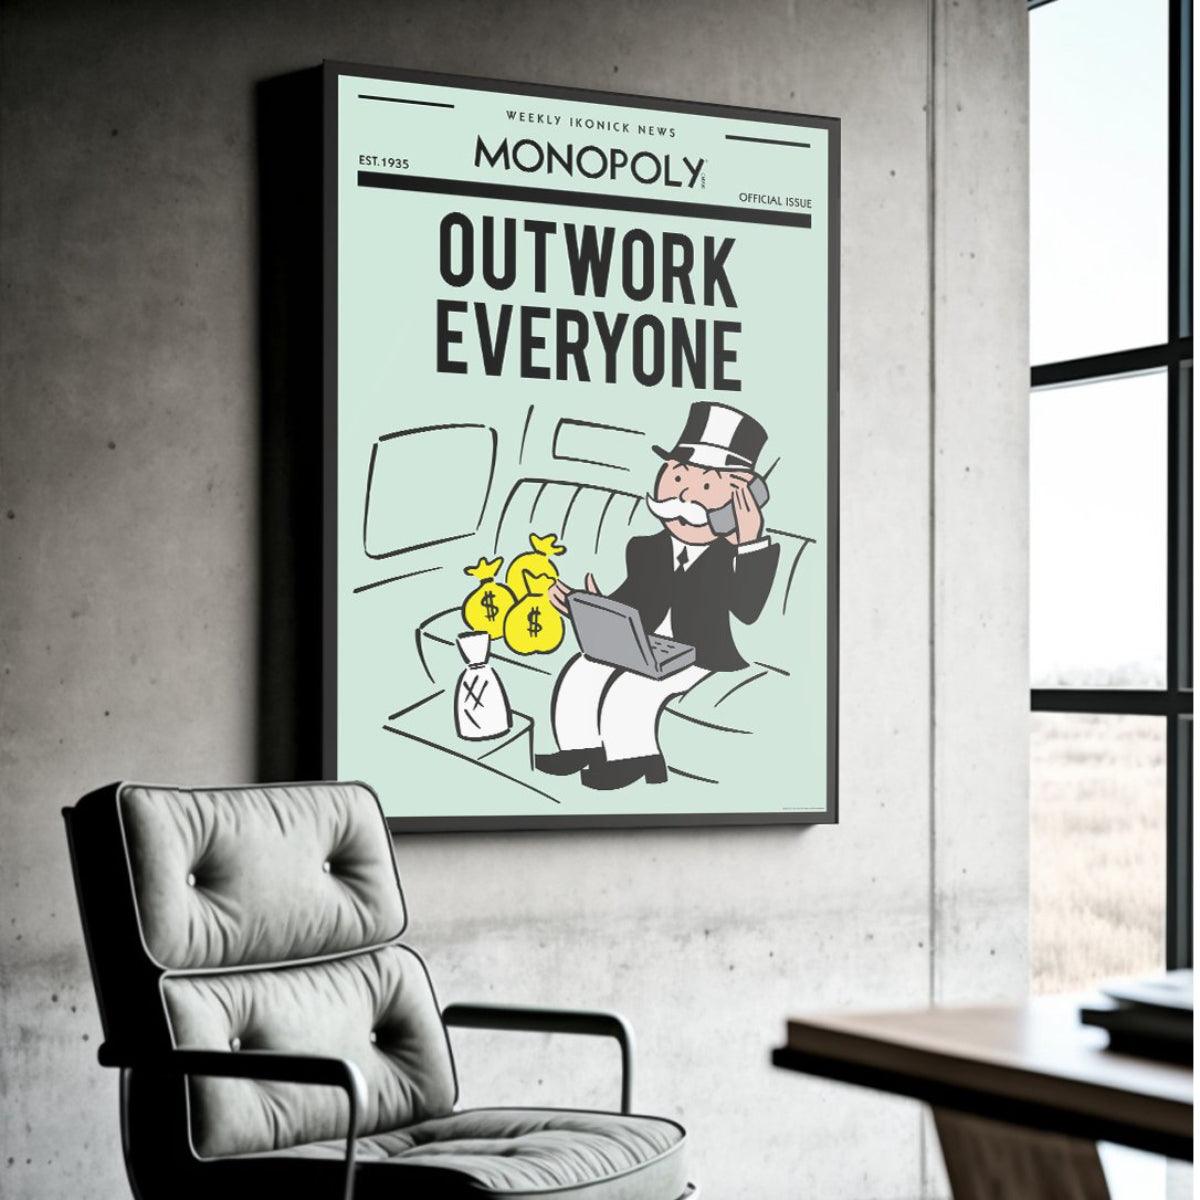 IKONICK Monopoly Man Art - Outwork Everyone